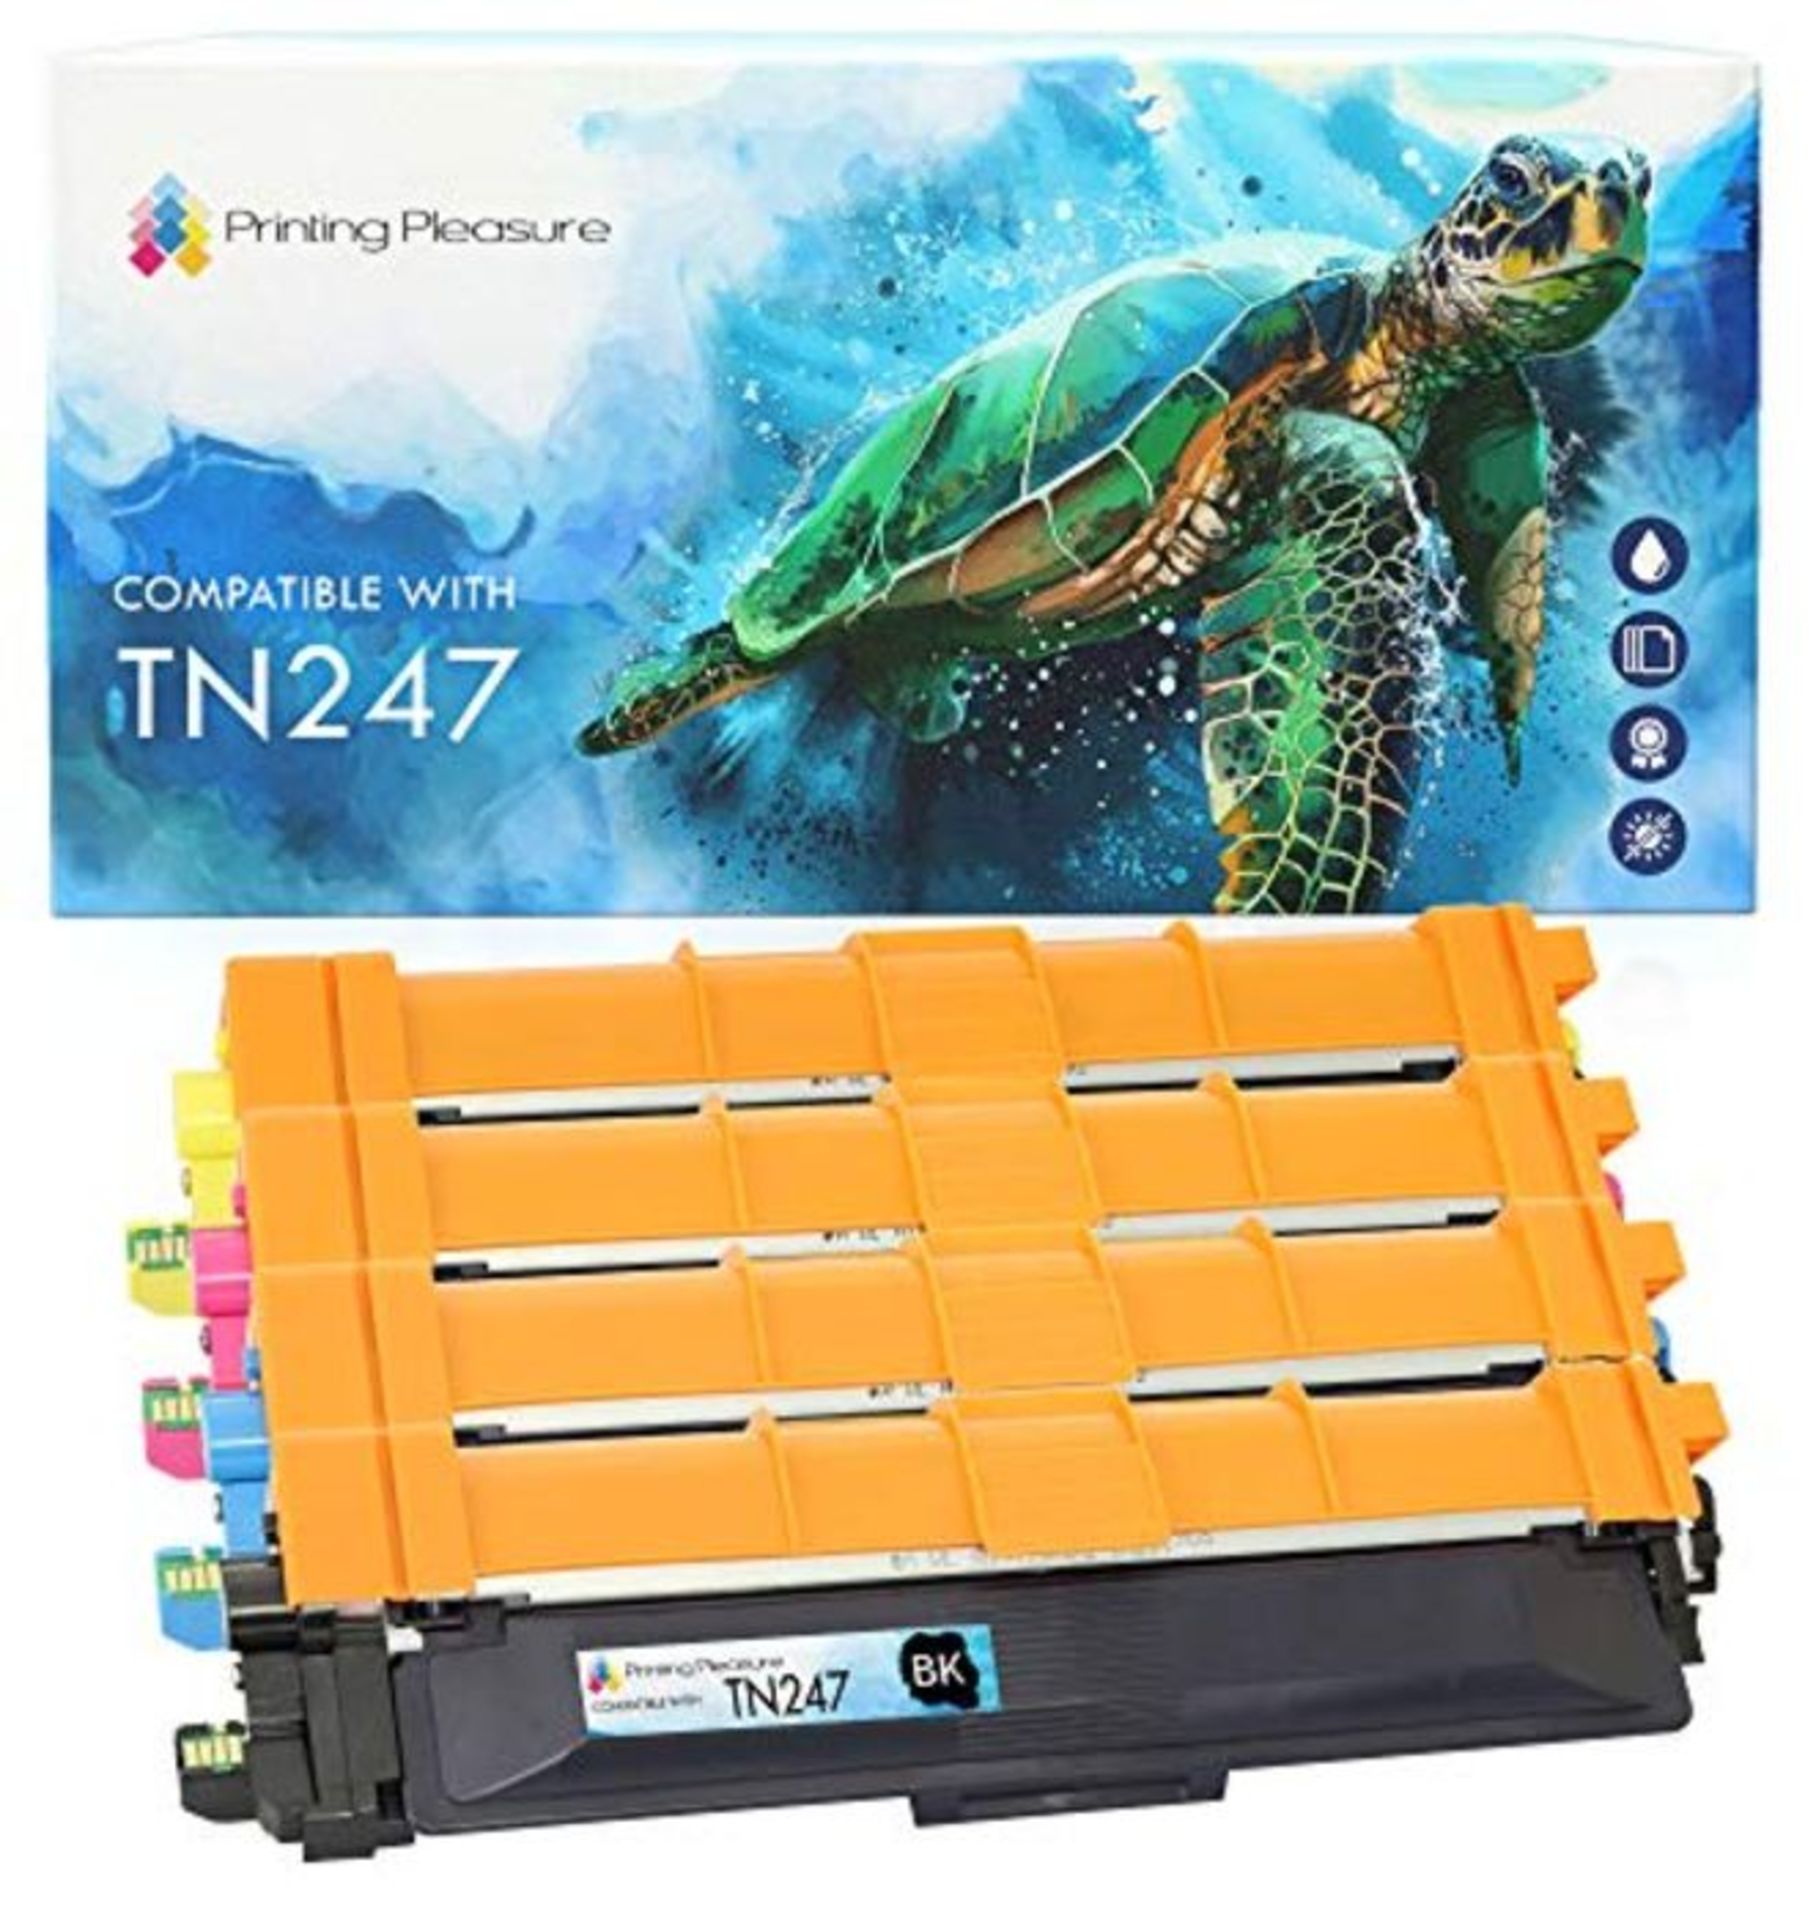 Printing Pleasure TN-247 TN-243 4 Toner Cartridges TN247 compatible for Brother DCP-L3